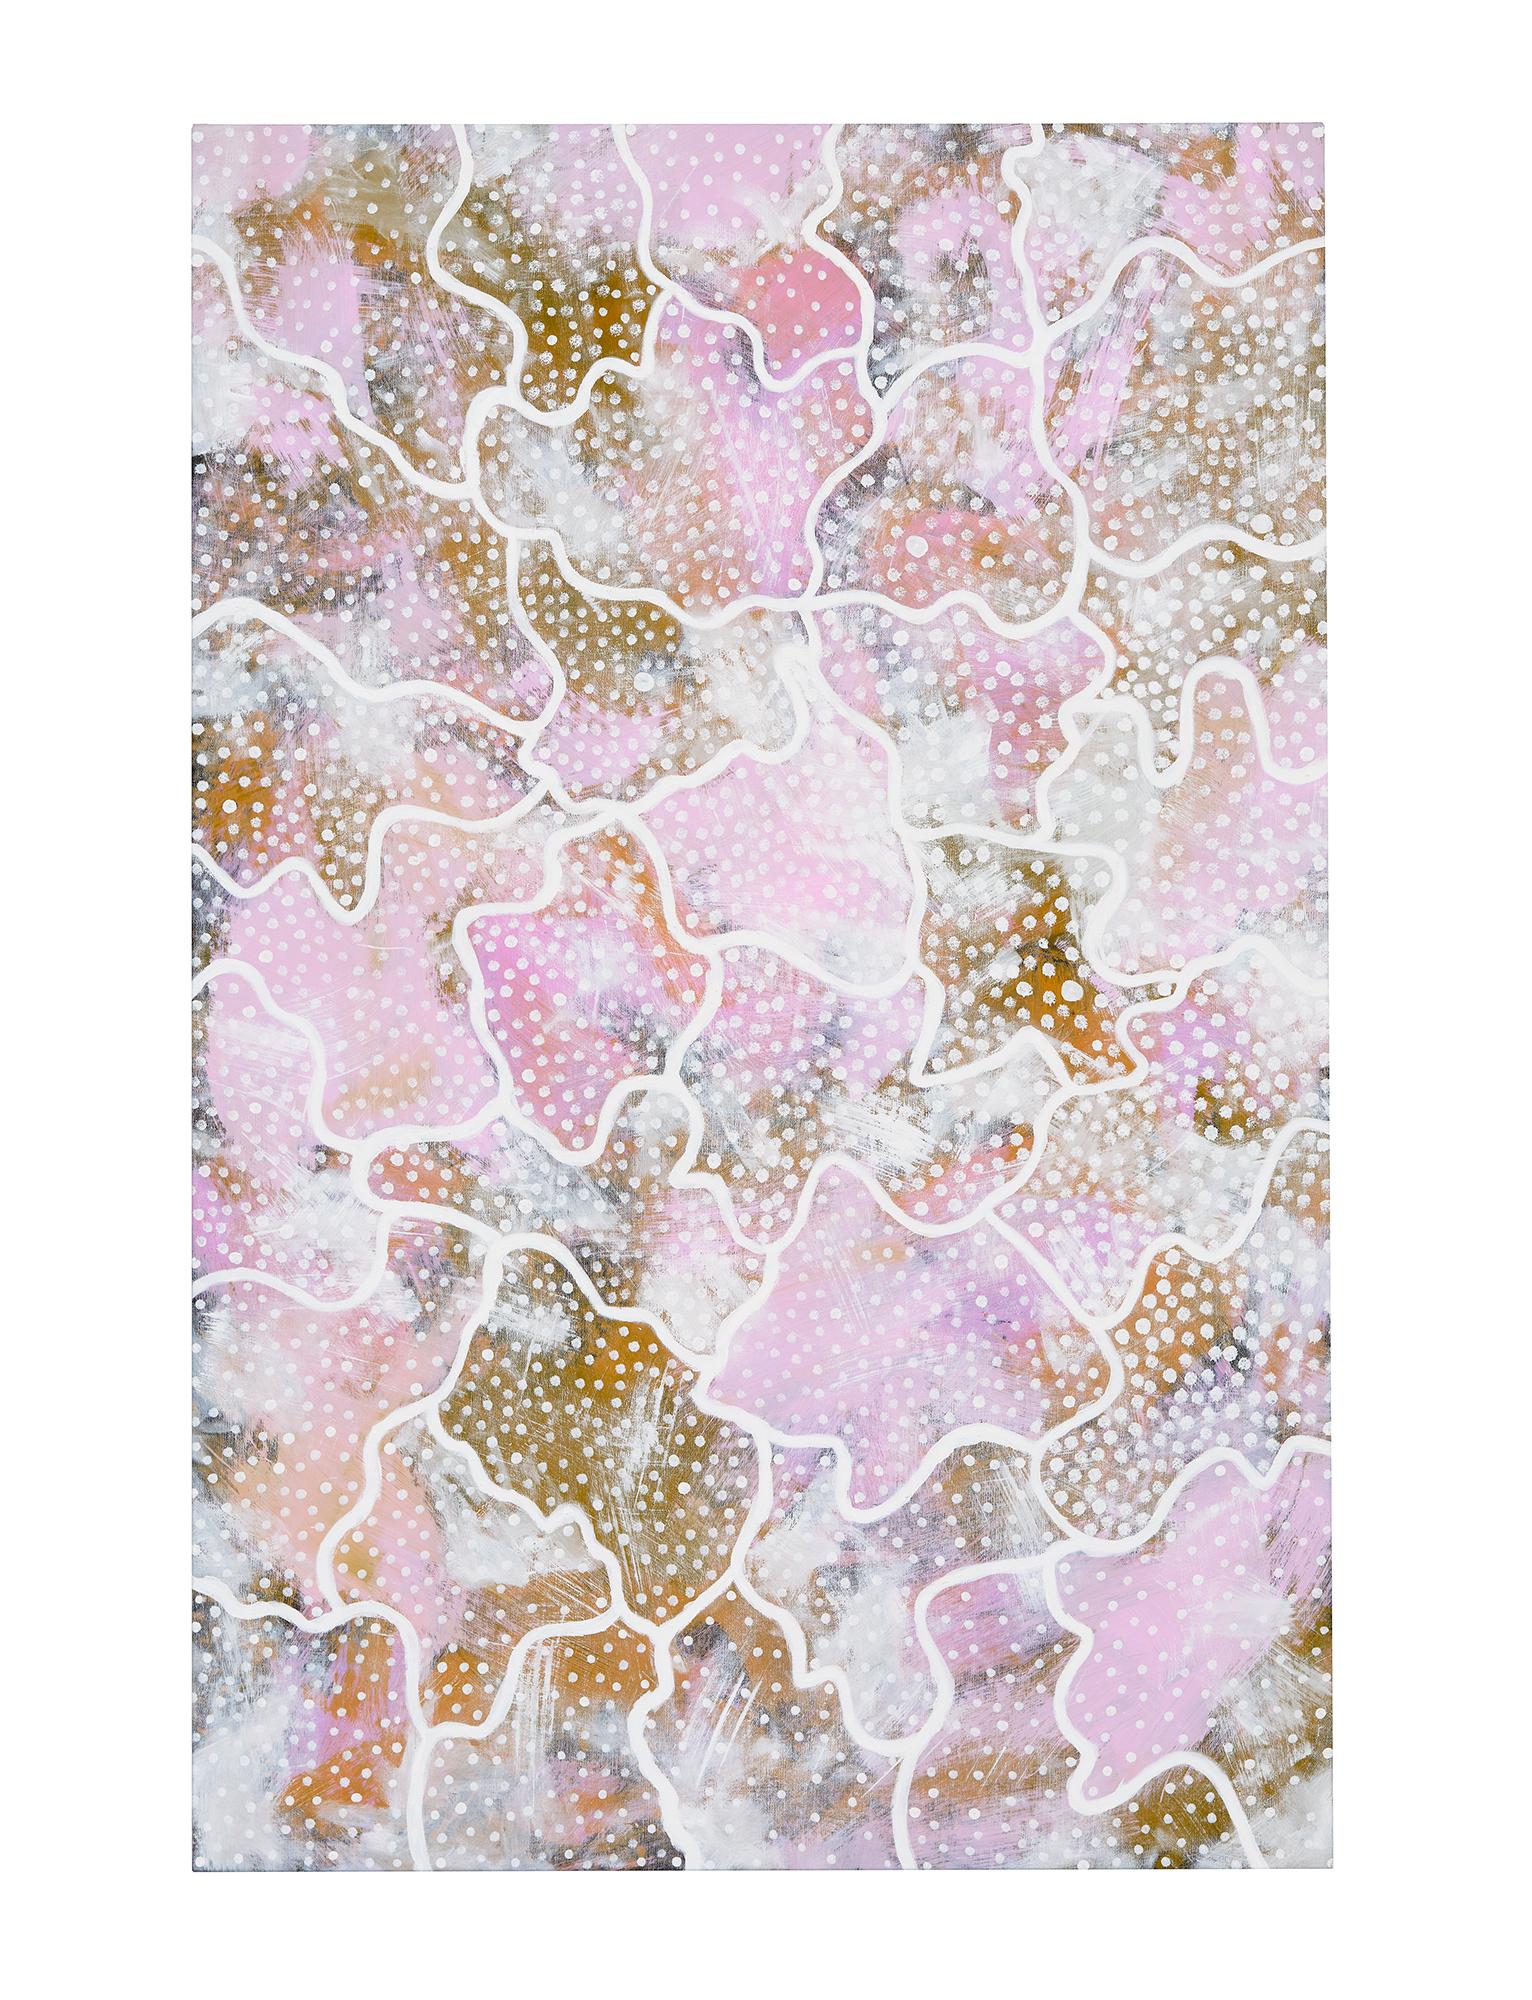 Keith Wikmunea
Piintal - Apalech Saltpan Country, 2023
Earth pigment on linen
200cm x 131cm